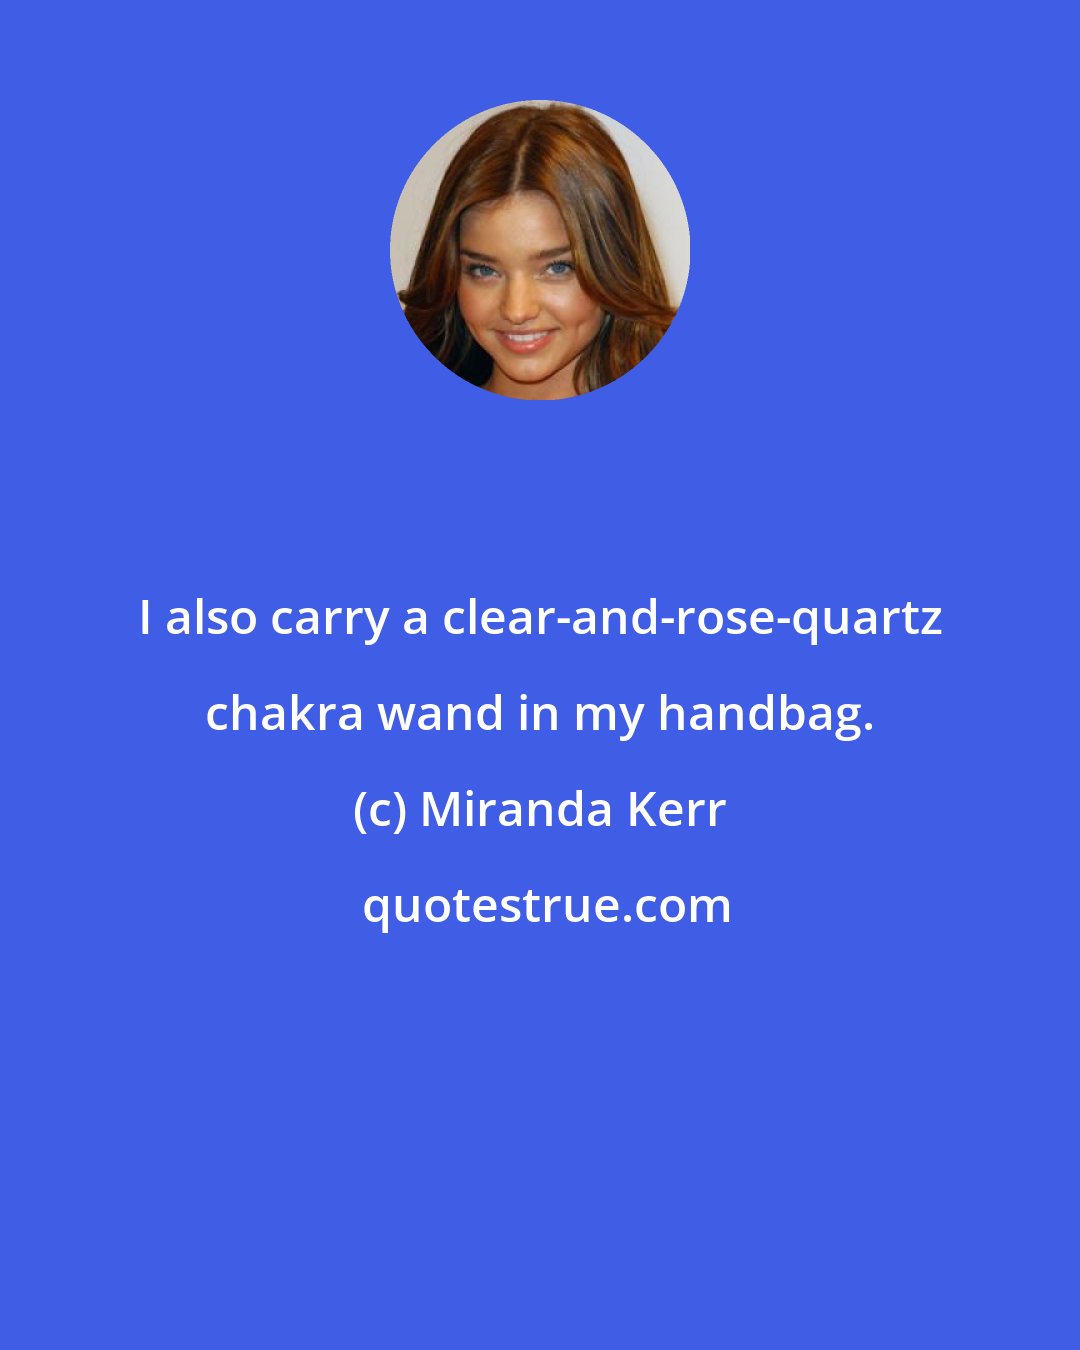 Miranda Kerr: I also carry a clear-and-rose-quartz chakra wand in my handbag.